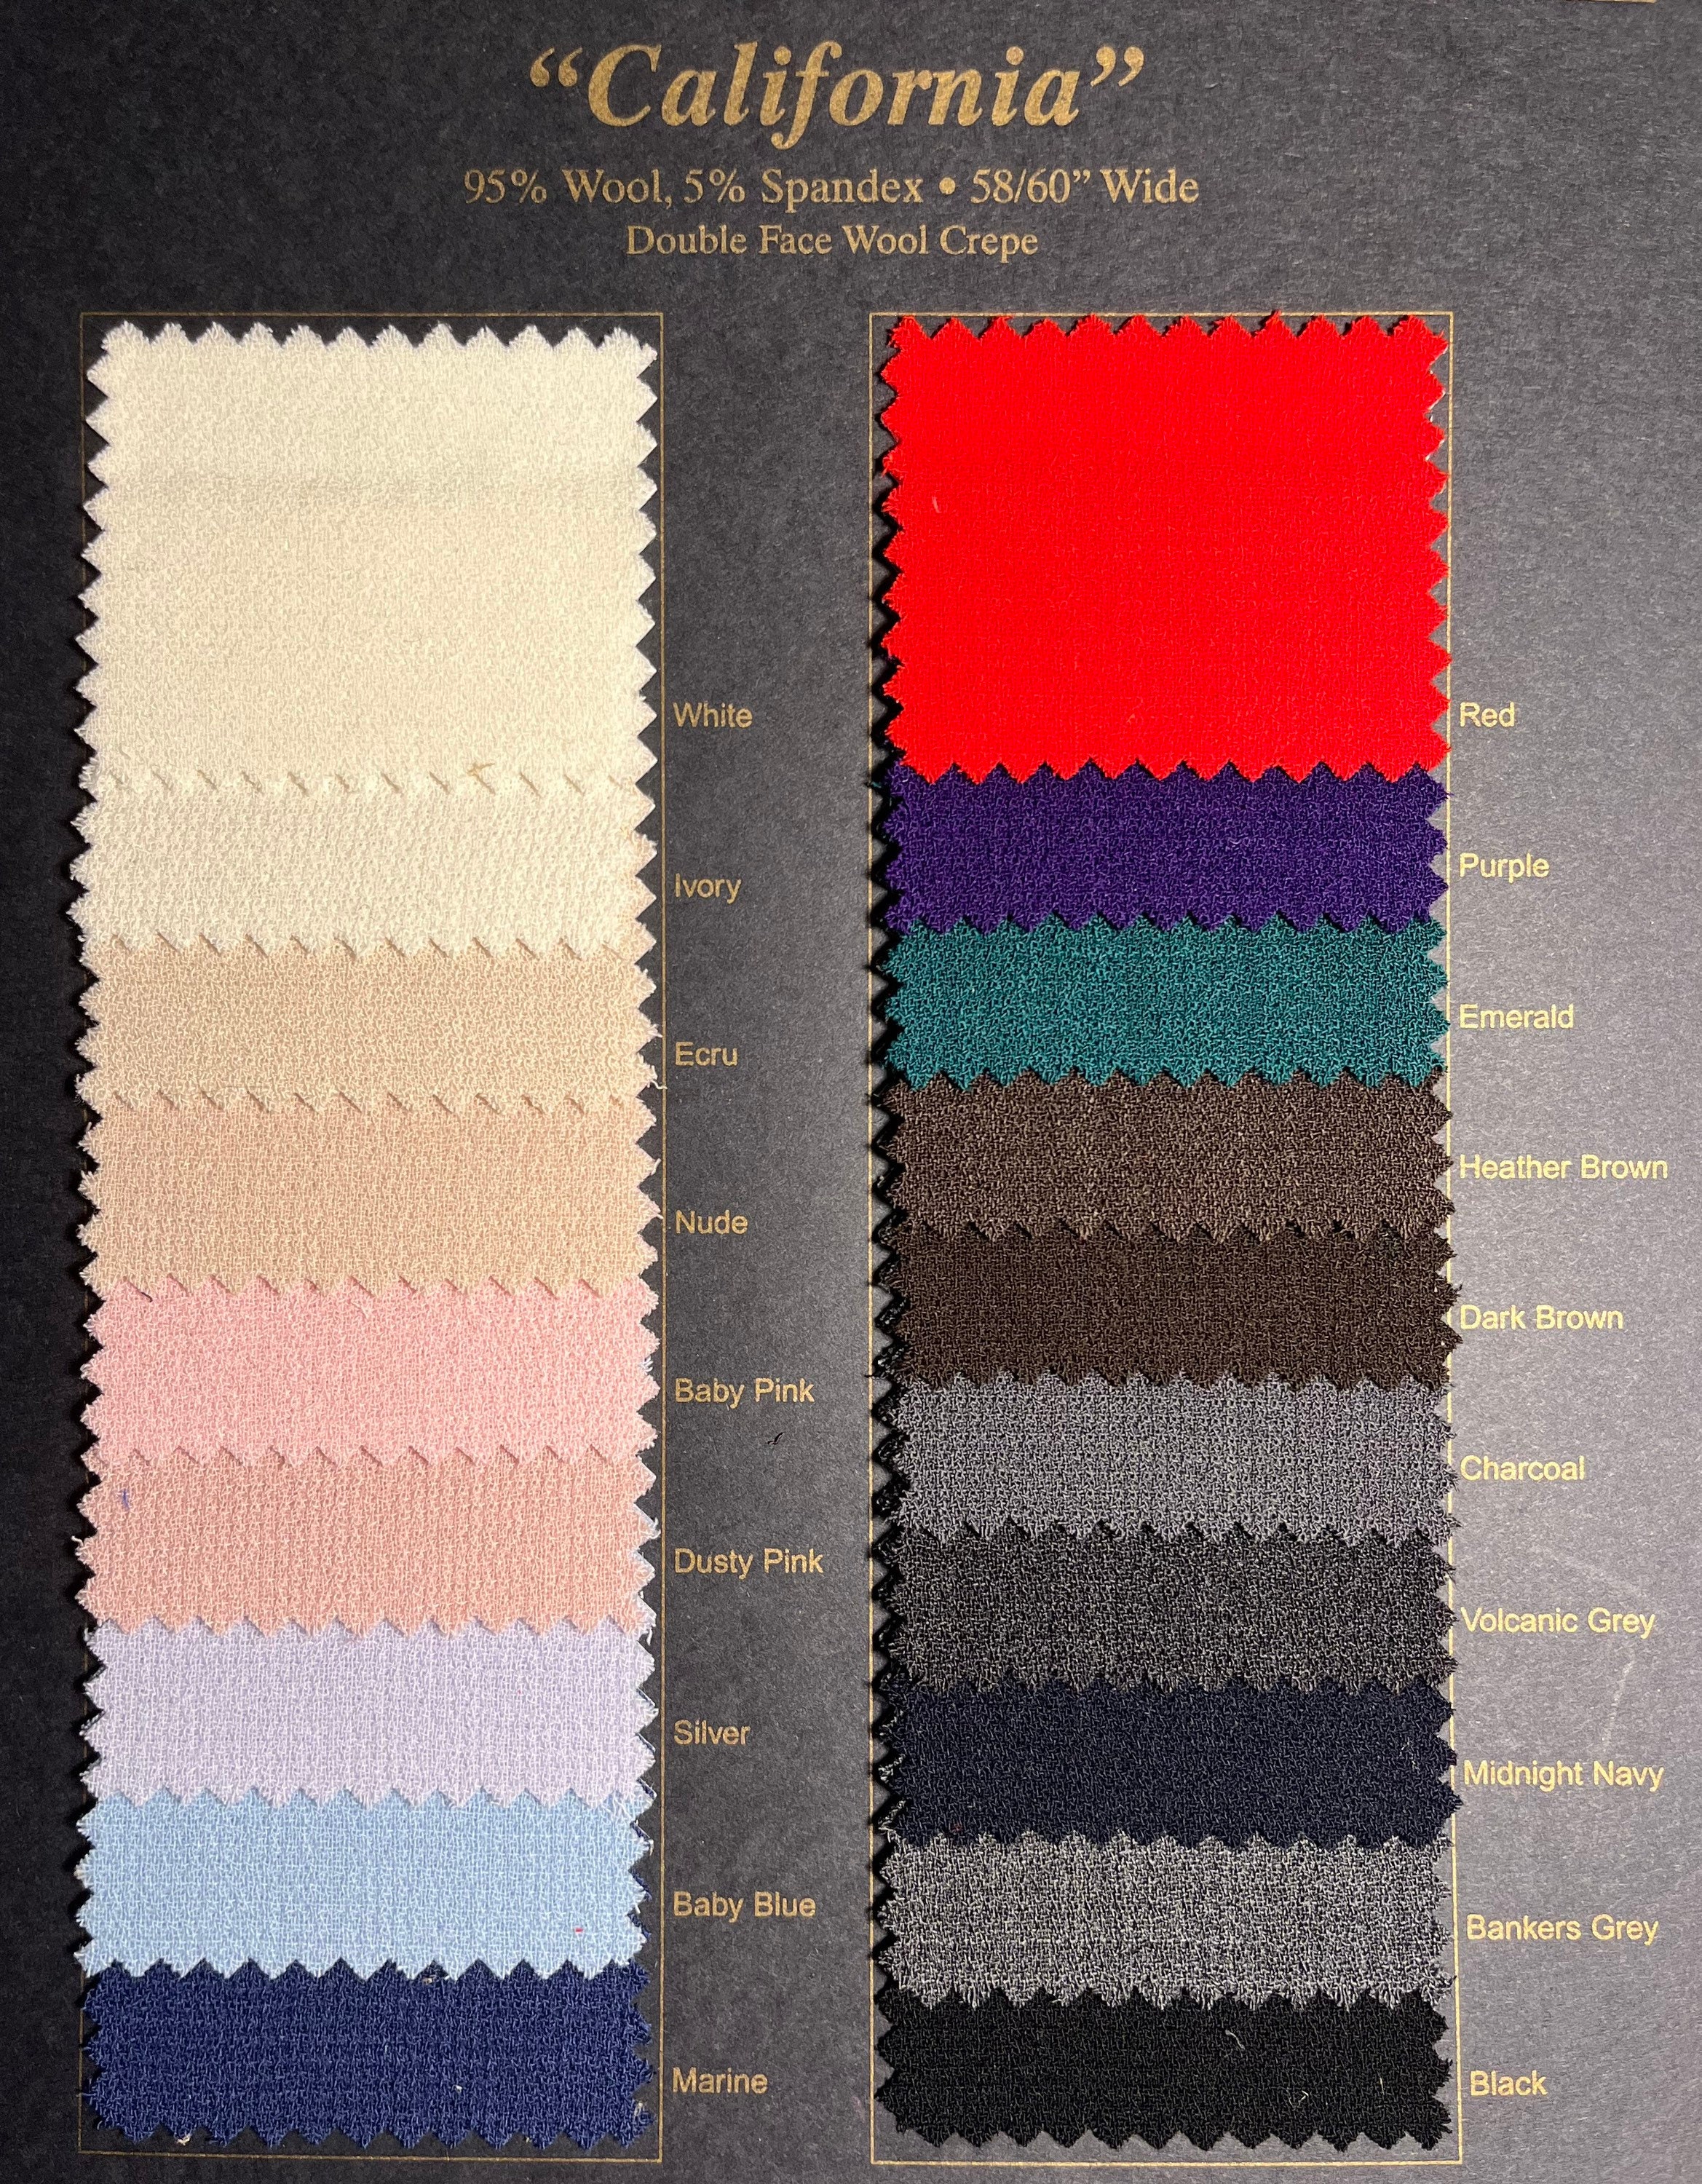 Stretch Cotton Blend Wool Black Fabric (Remnant-85cmx125cm) Fabric Cut off  Fabric Fashion Fabric Clothing Crafts Supplies